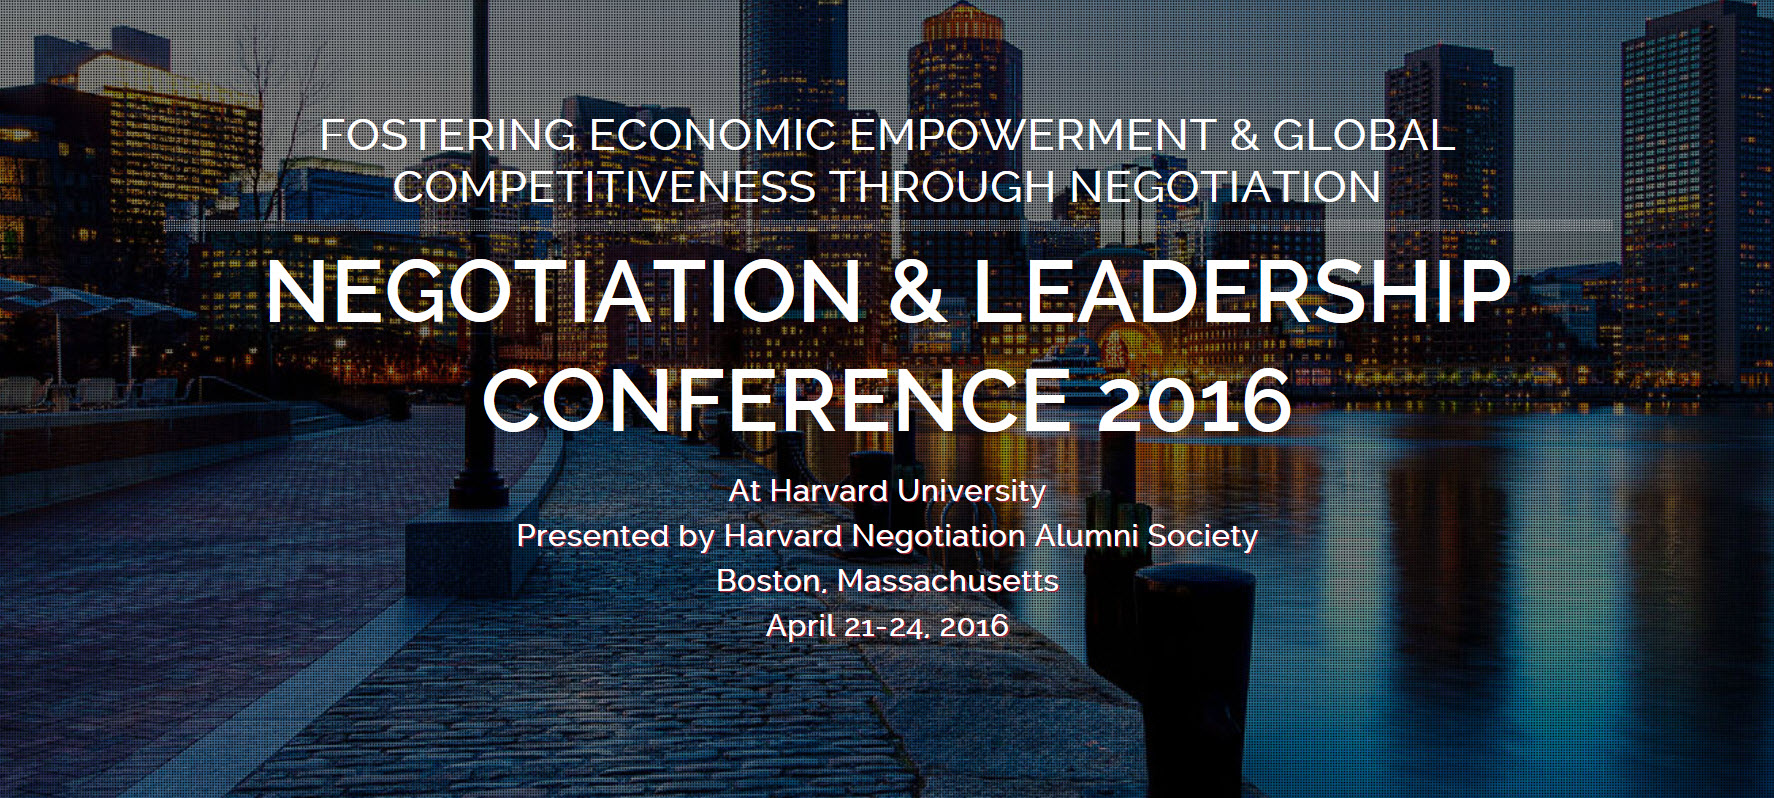 Negotiation Leadership Conference at Harvard - Consensus Invited to Deliver Training Workshop Program